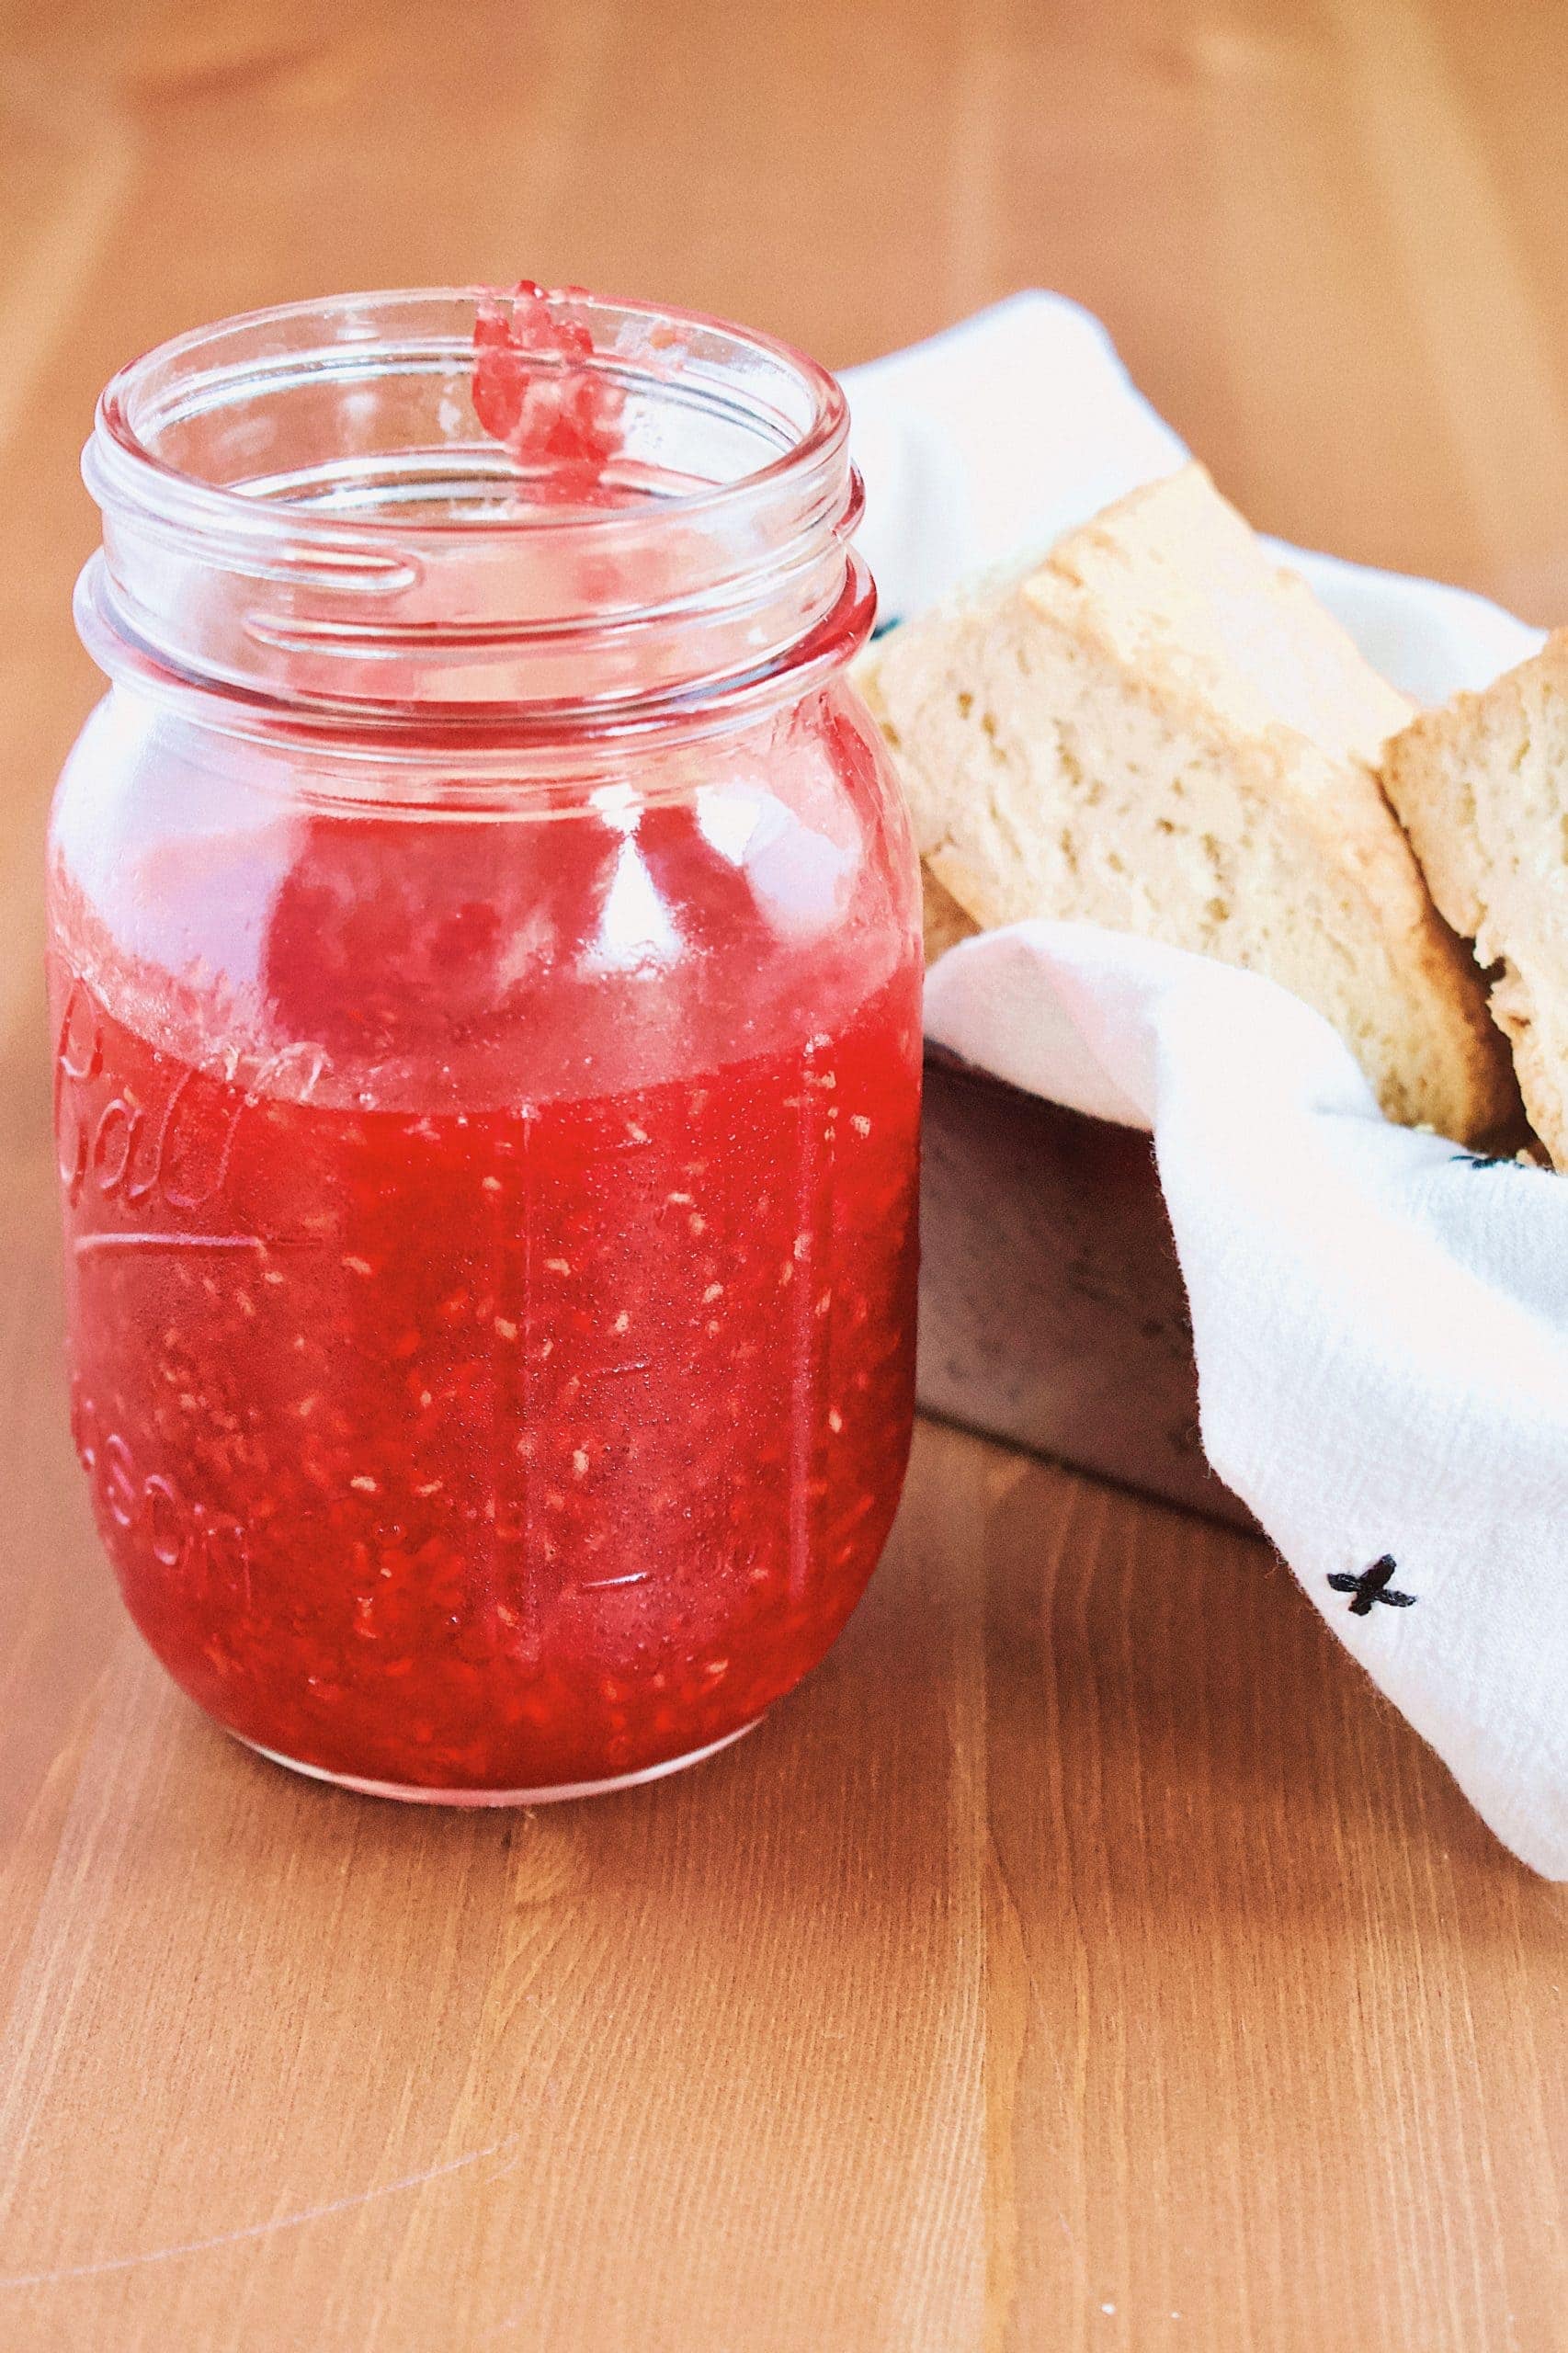 Raspberry Jam and homemade scones